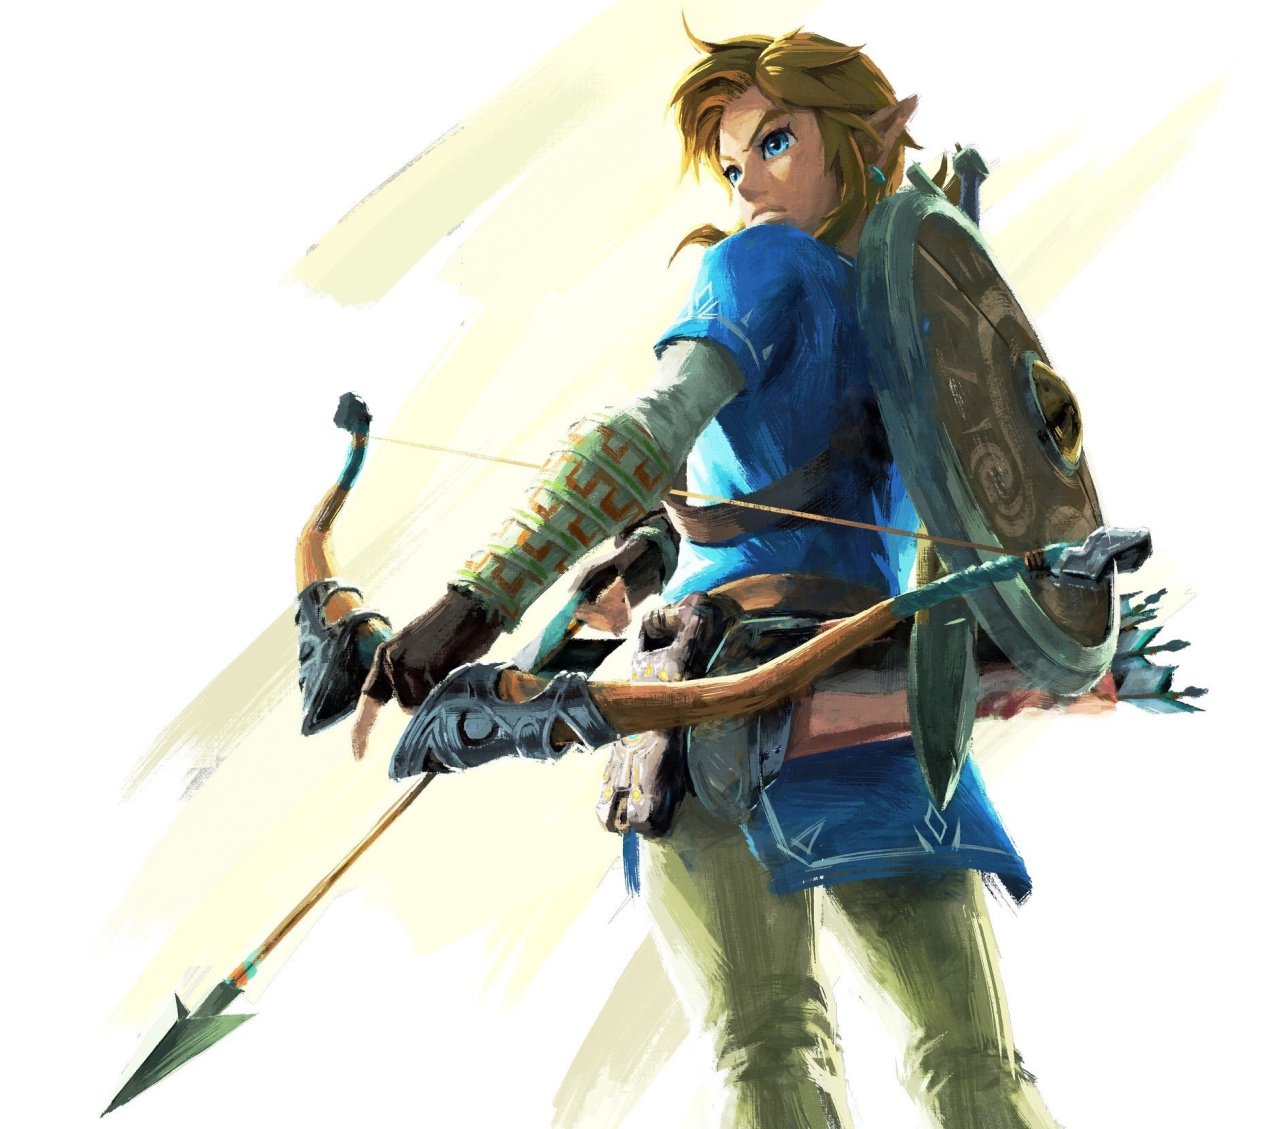 Game & Watch: The Legend of Zelda Was Nintendo's Big E3 Hardware Reveal